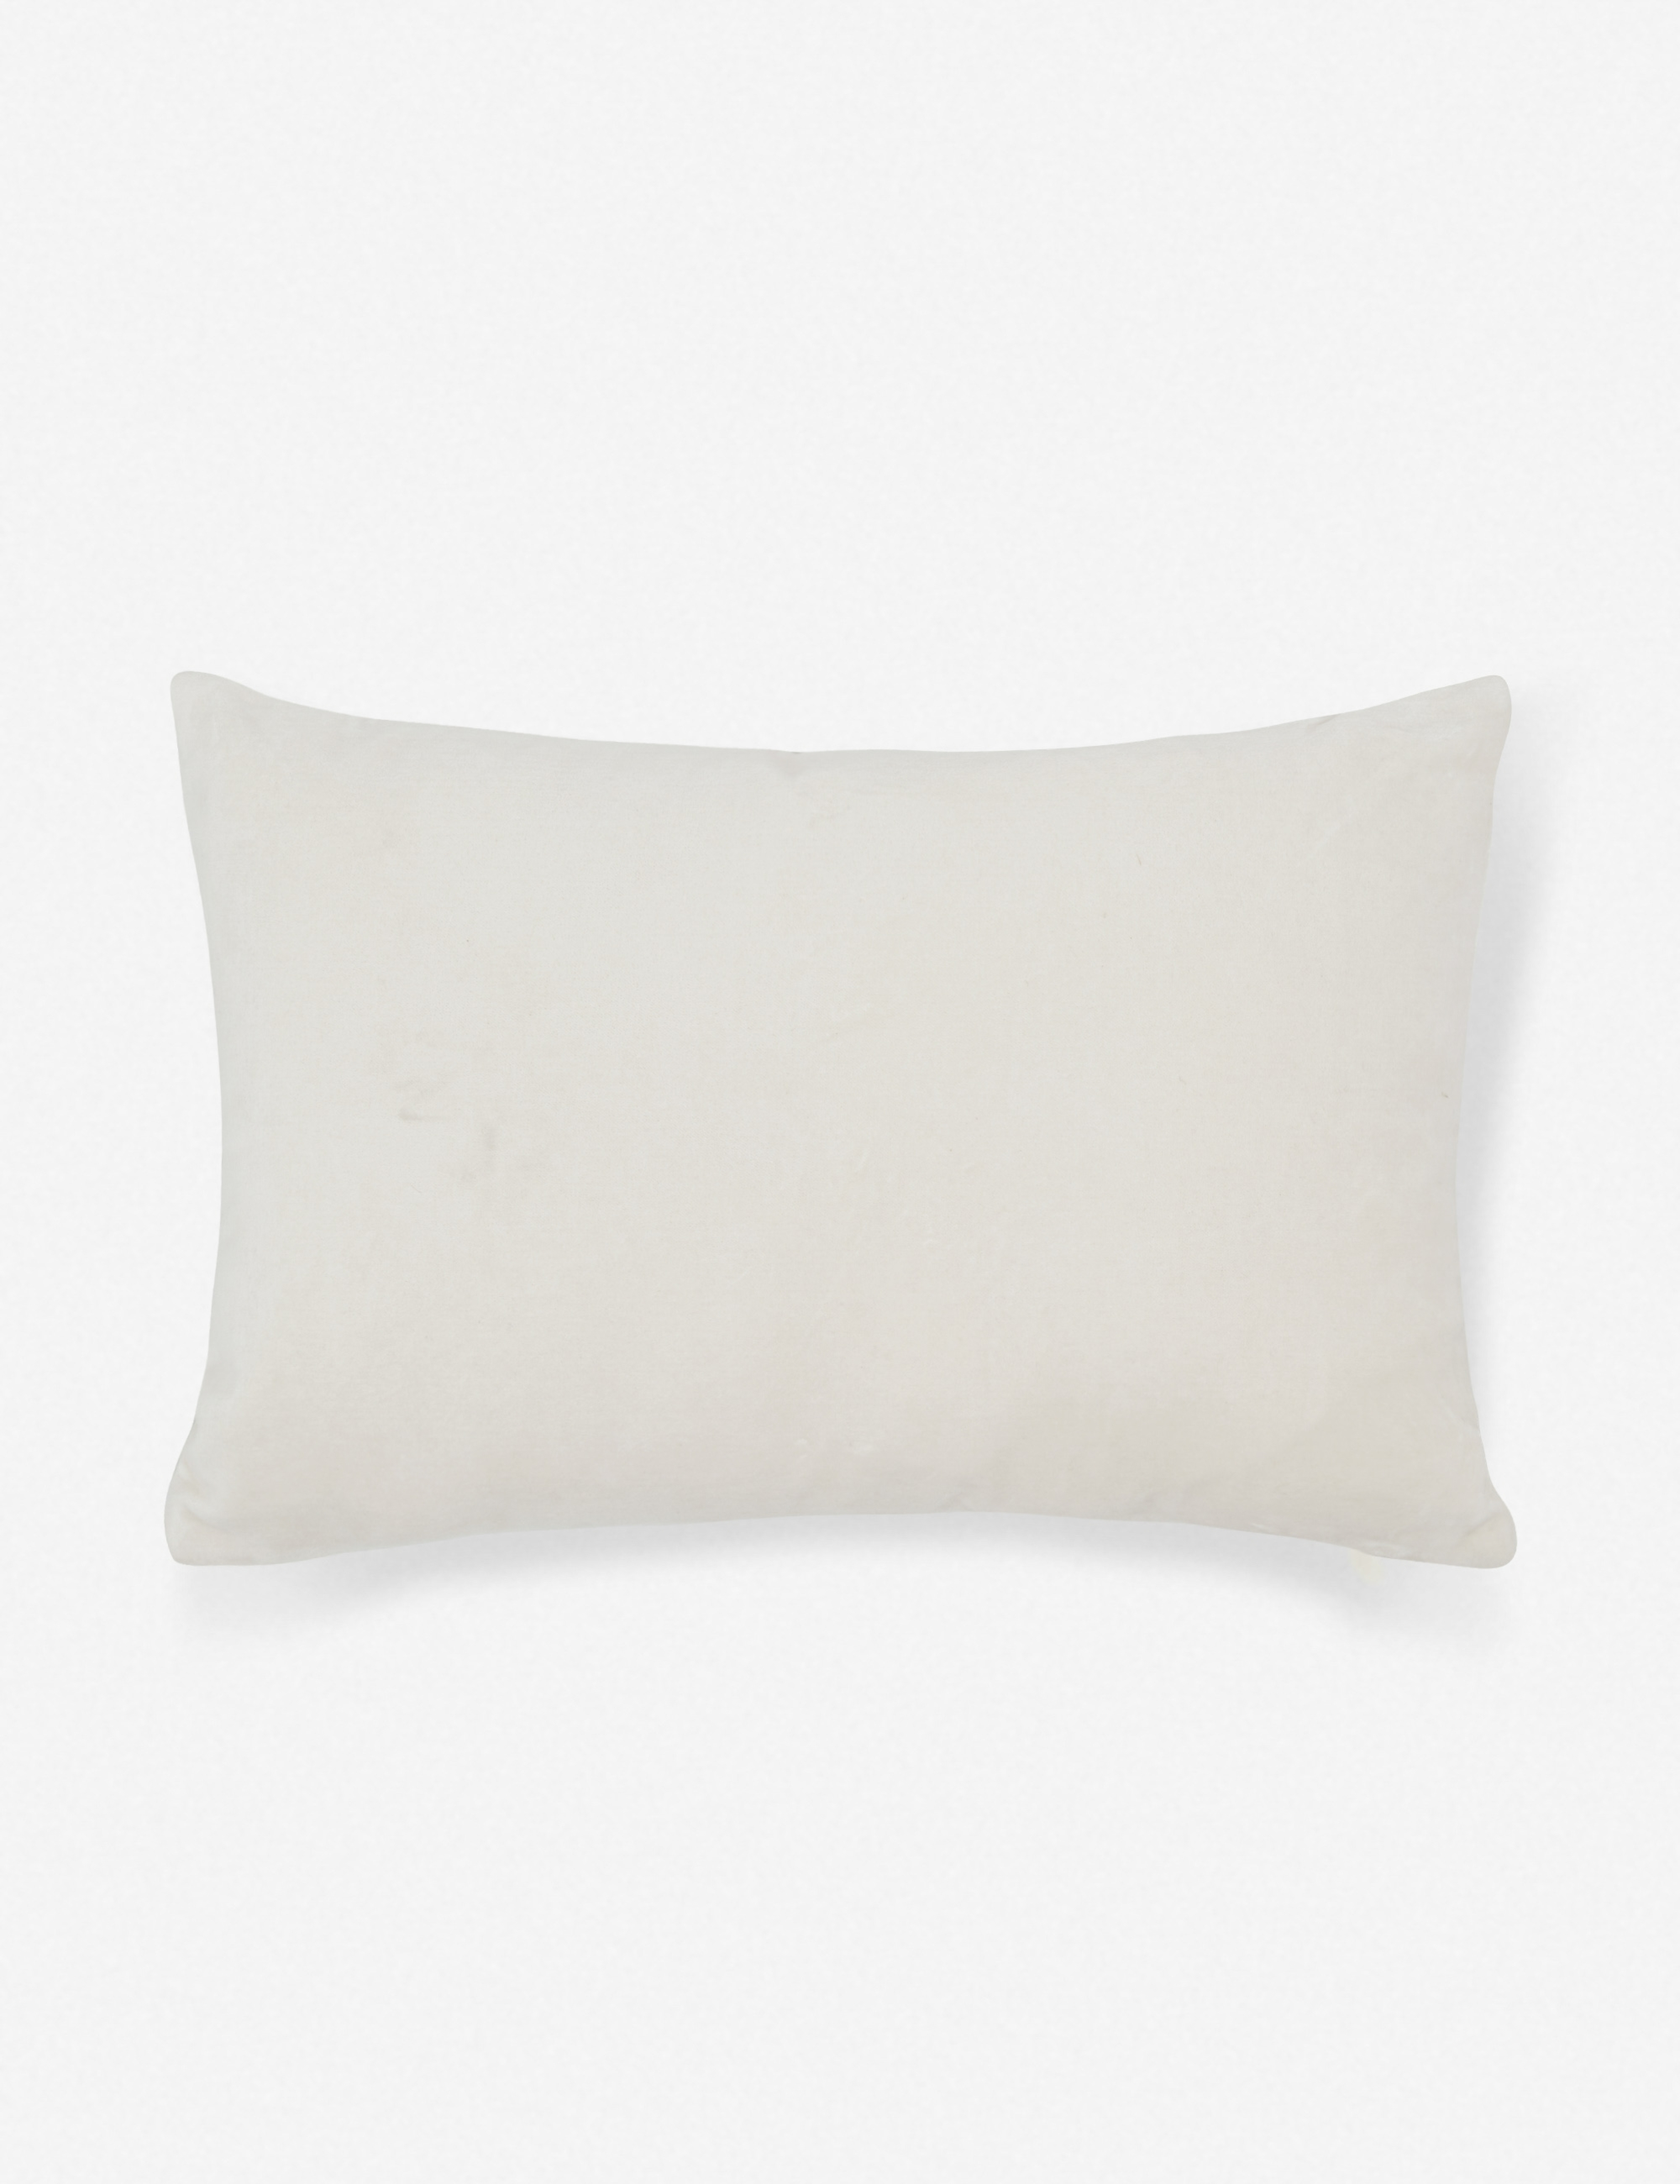 Charlotte Velvet Lumbar Pillow, Oyster, 20" x 13" - Lulu and Georgia